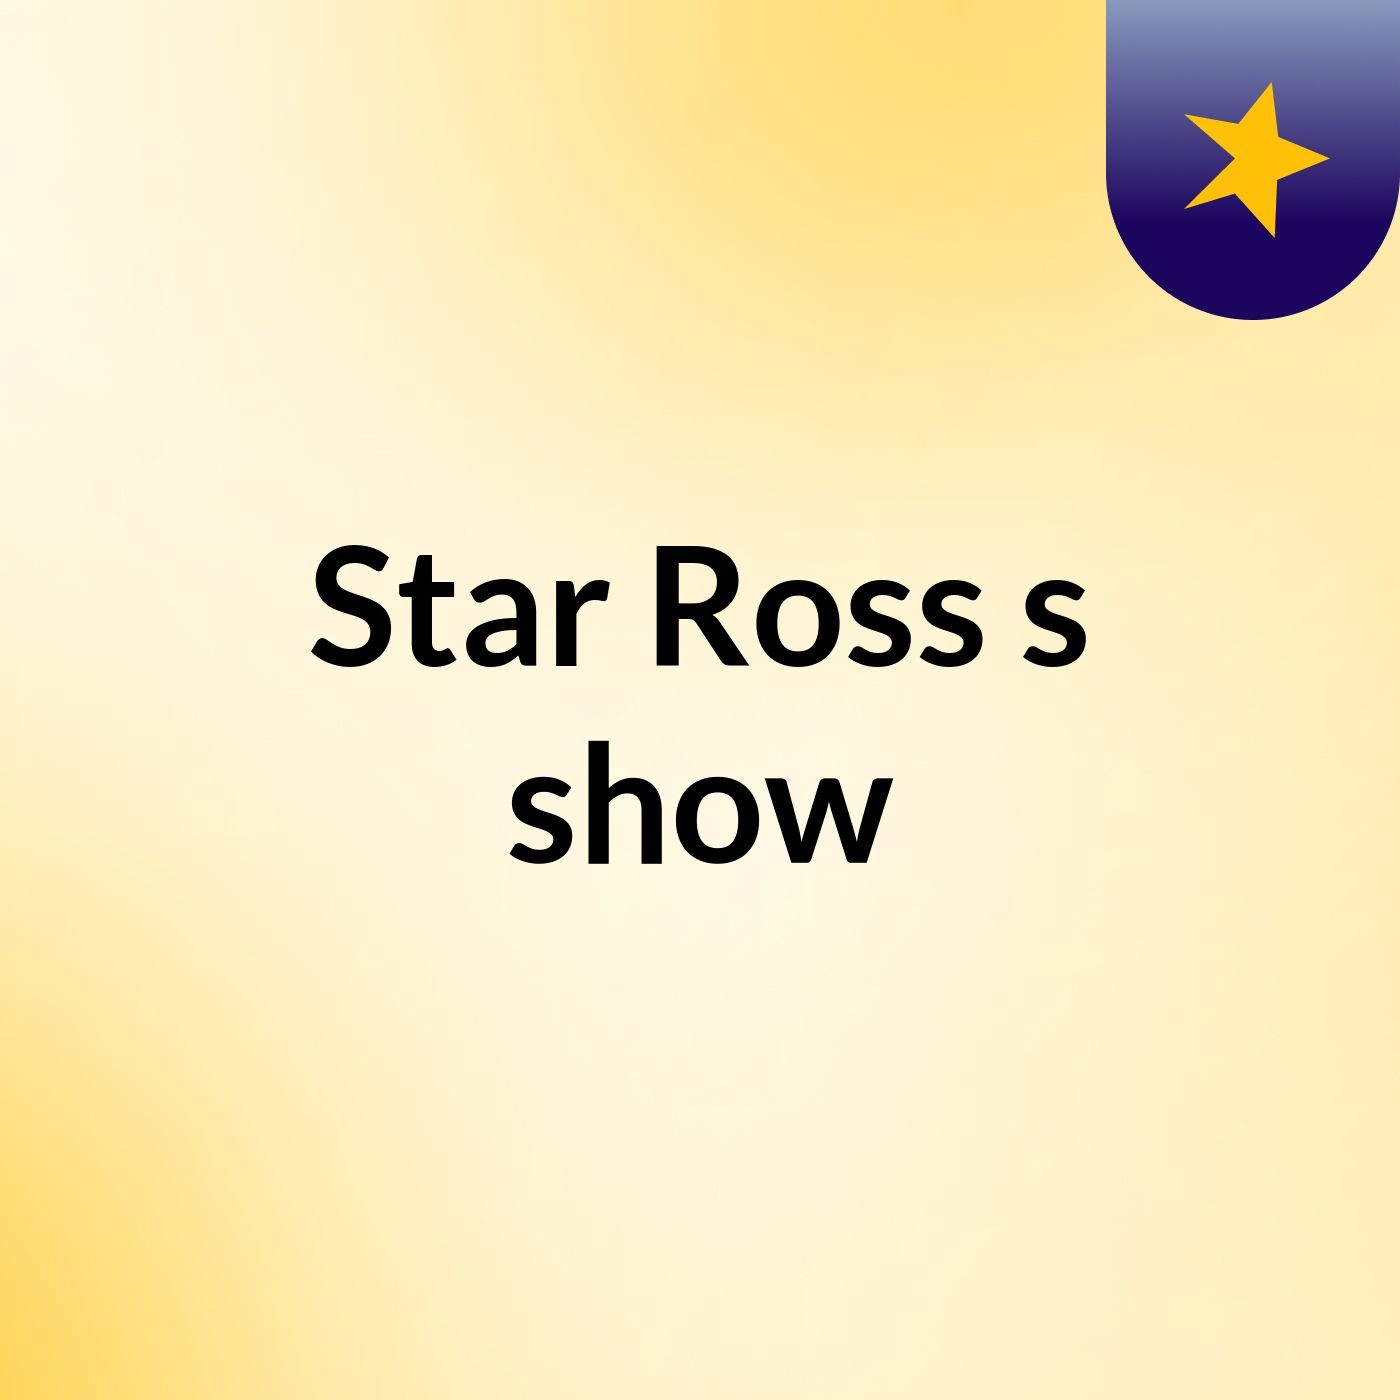 Star Ross's show